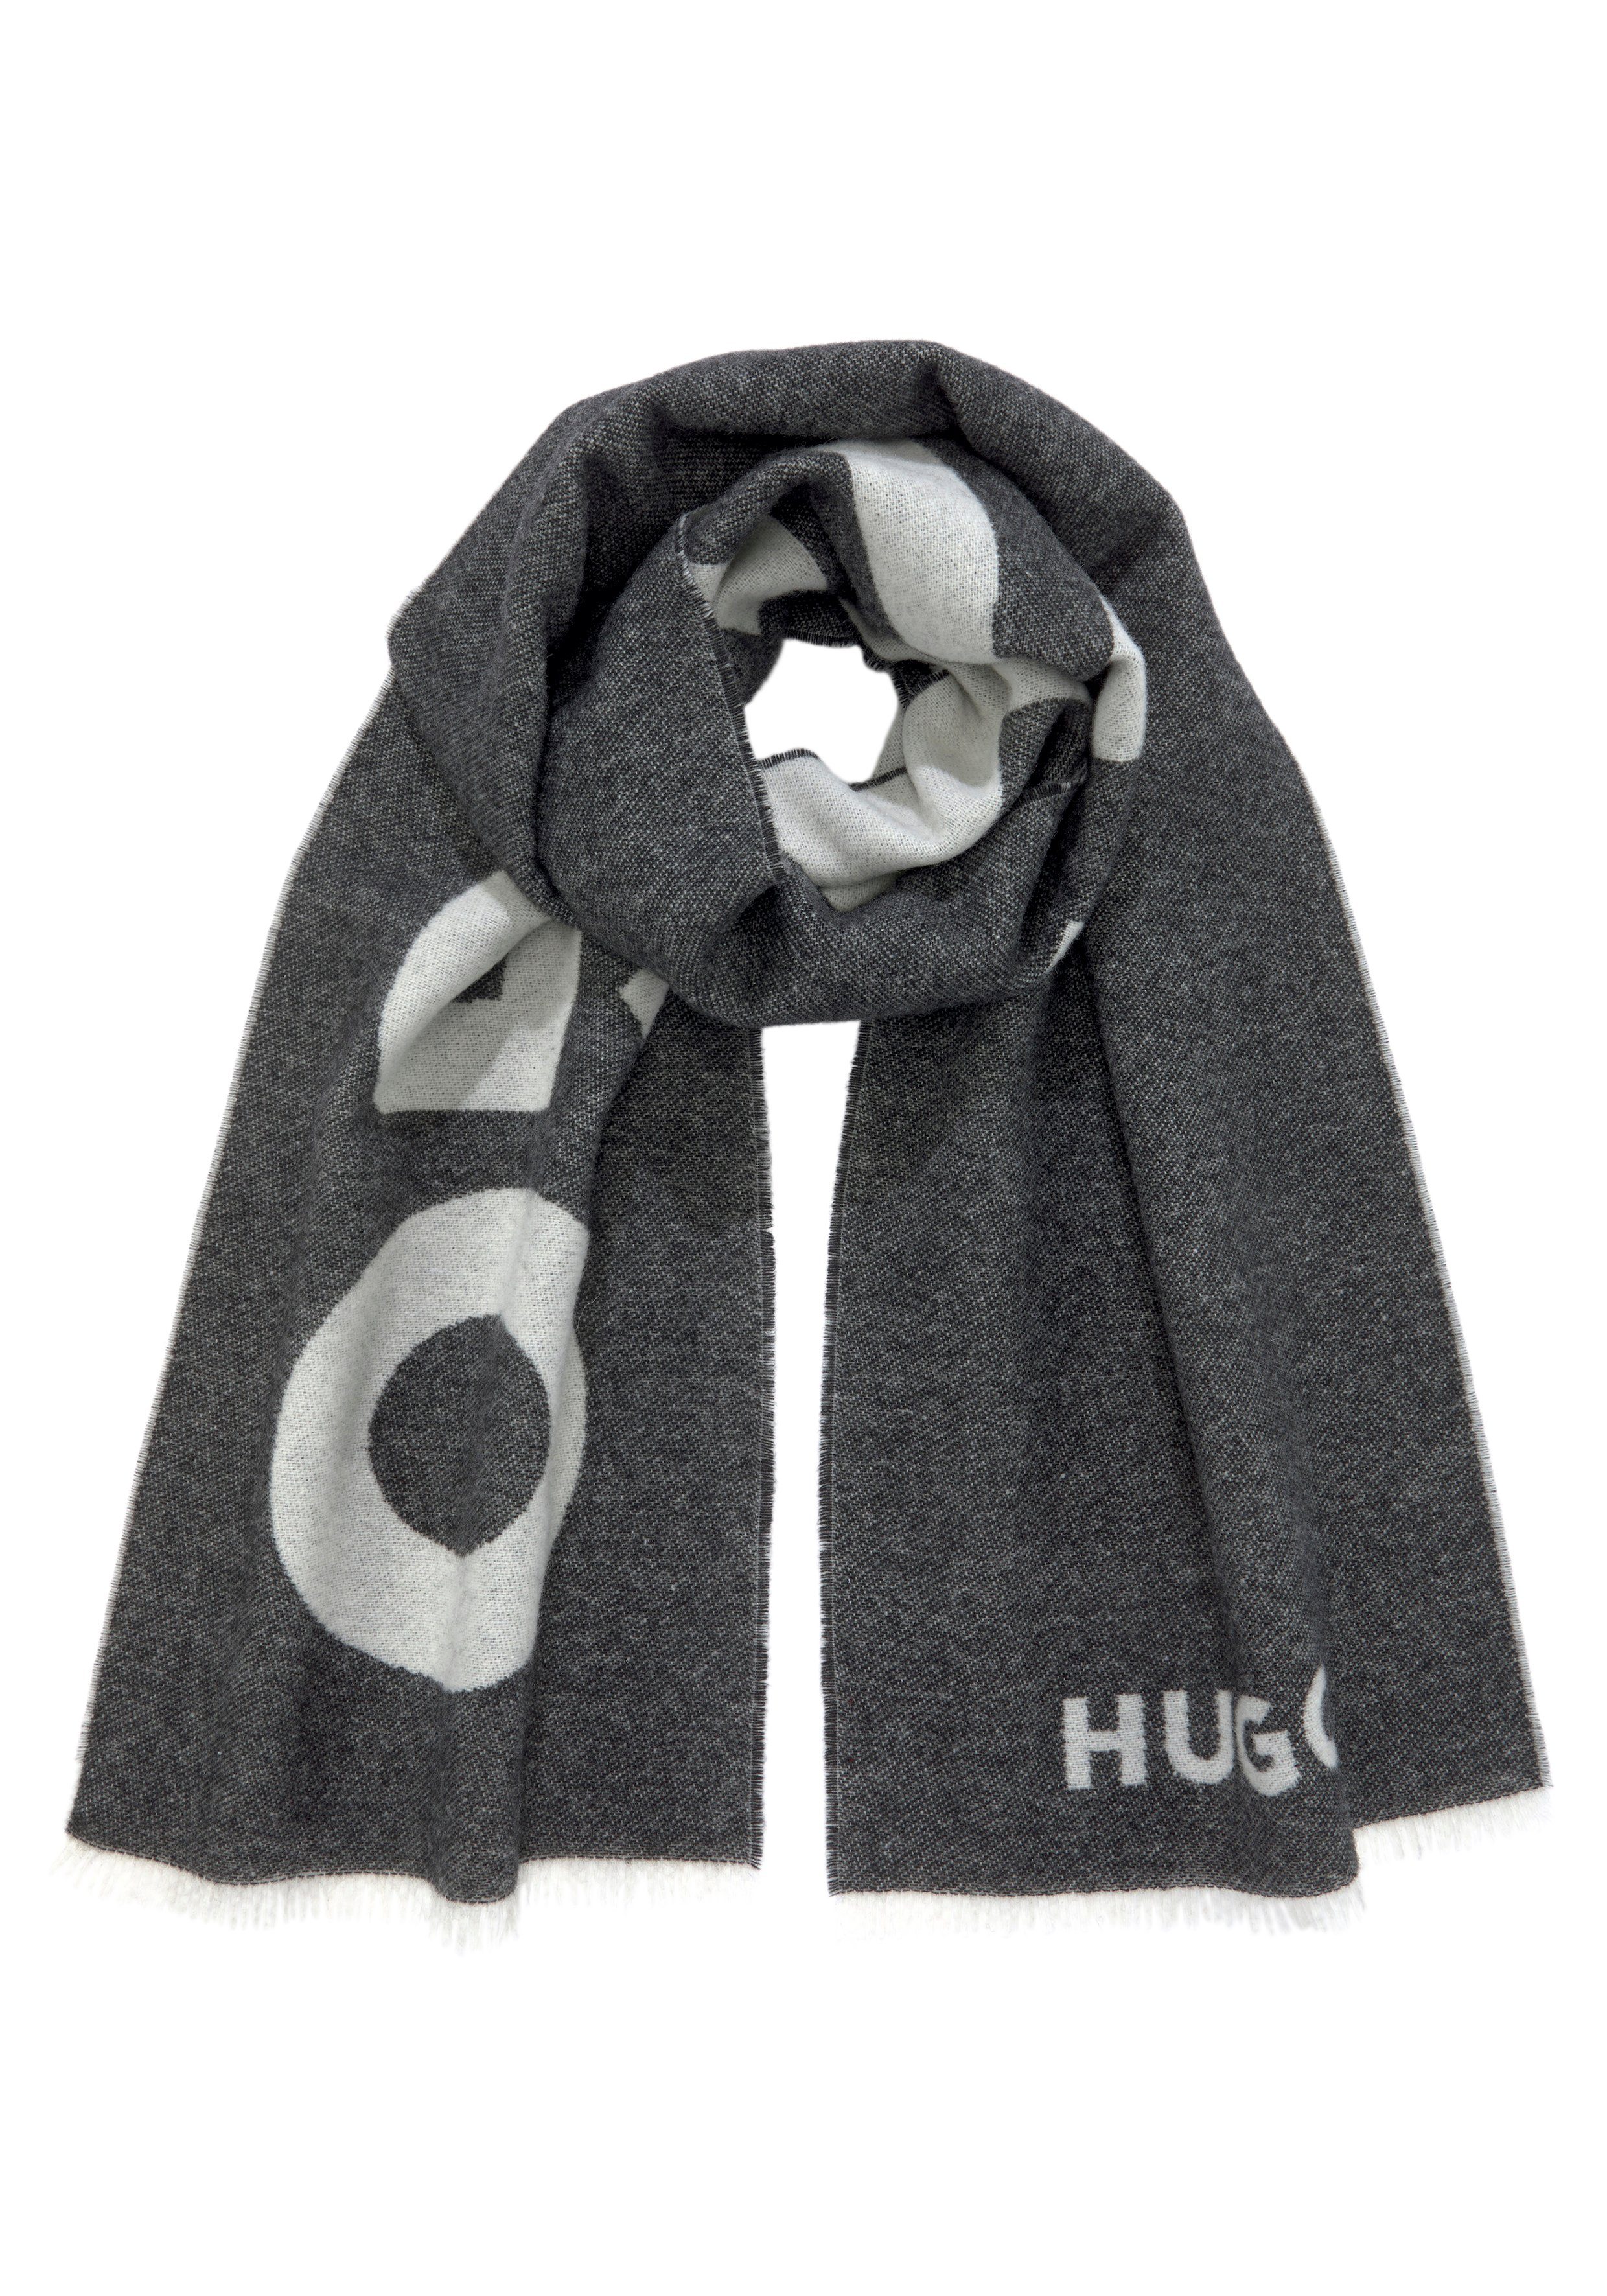 HUGO Schal Alexie, aus Woll-Mix mit Kontrastfarbenem Hugo-Logo, 200 x 32 cm schwarz (15)